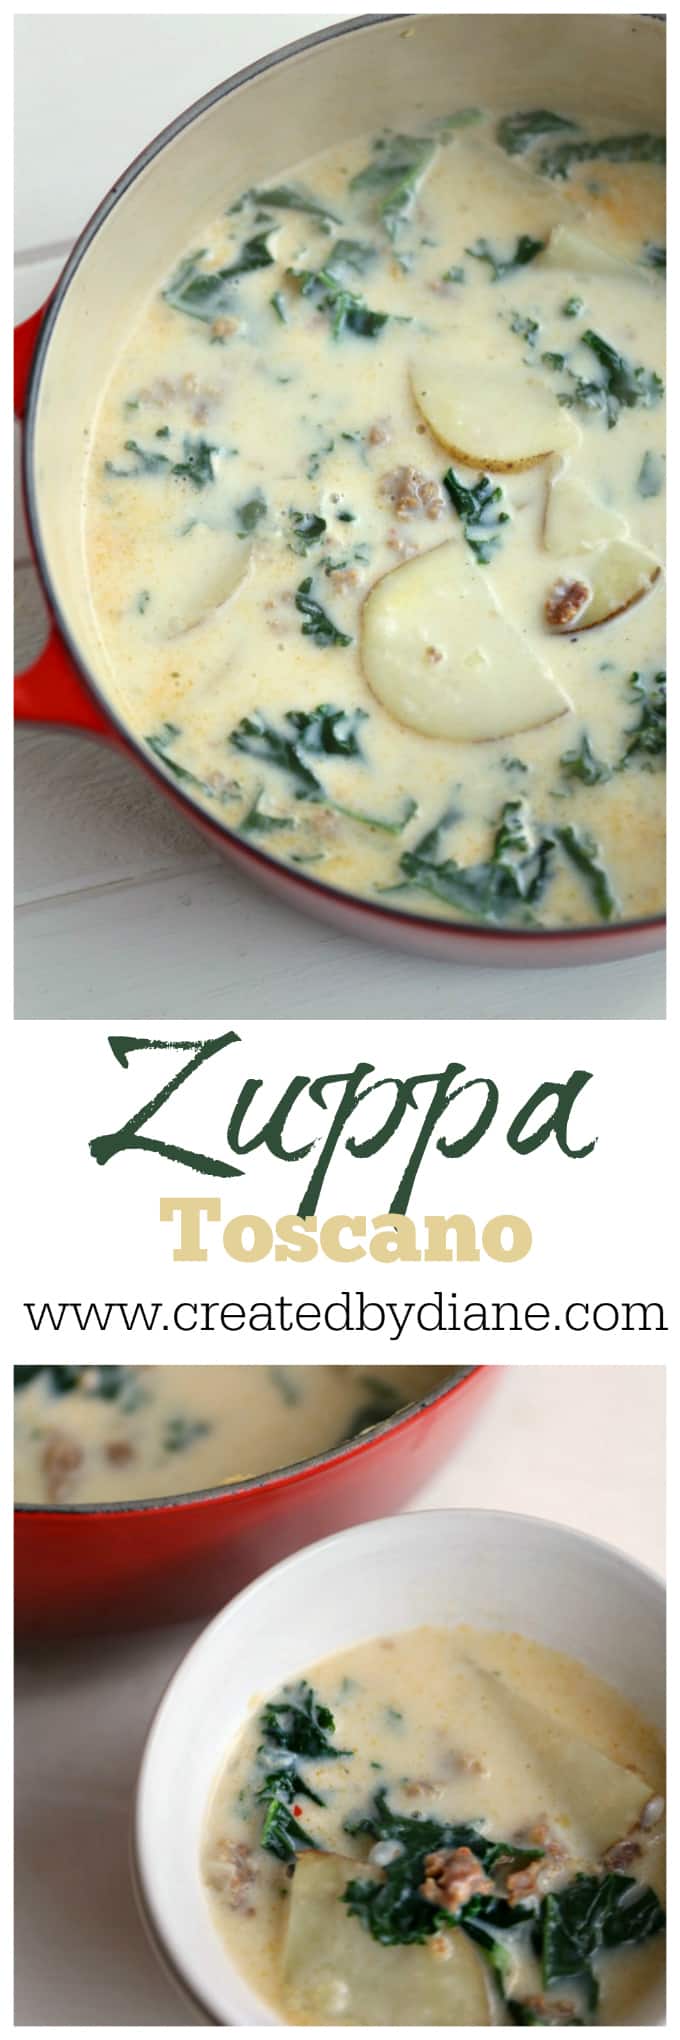 Zuppa Toscano recipe in under 30 minutes www.createdbydiane.com